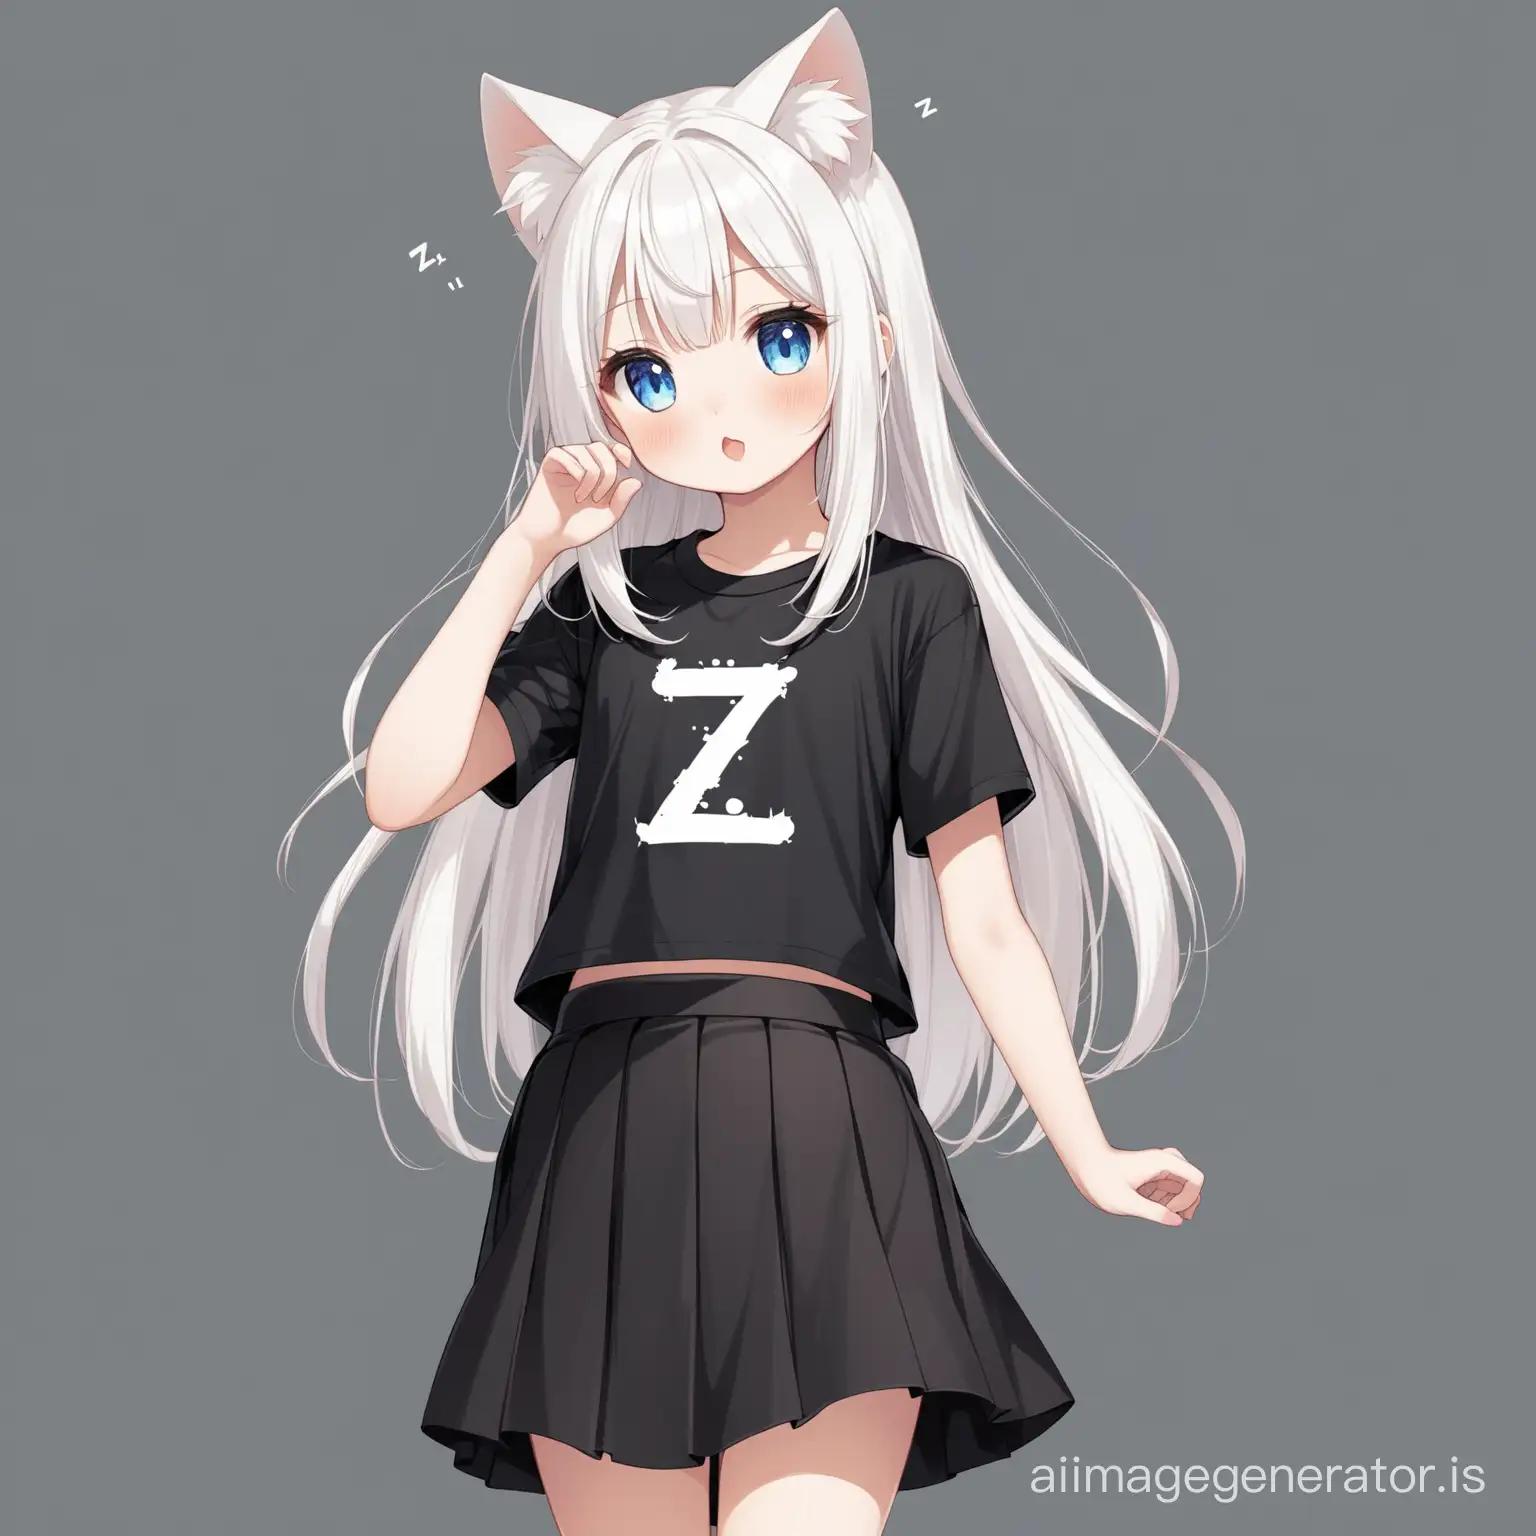 loli, long white hair, cat ears, black skirt, black T-shirt, with the text ‘Z’ on T-shirt